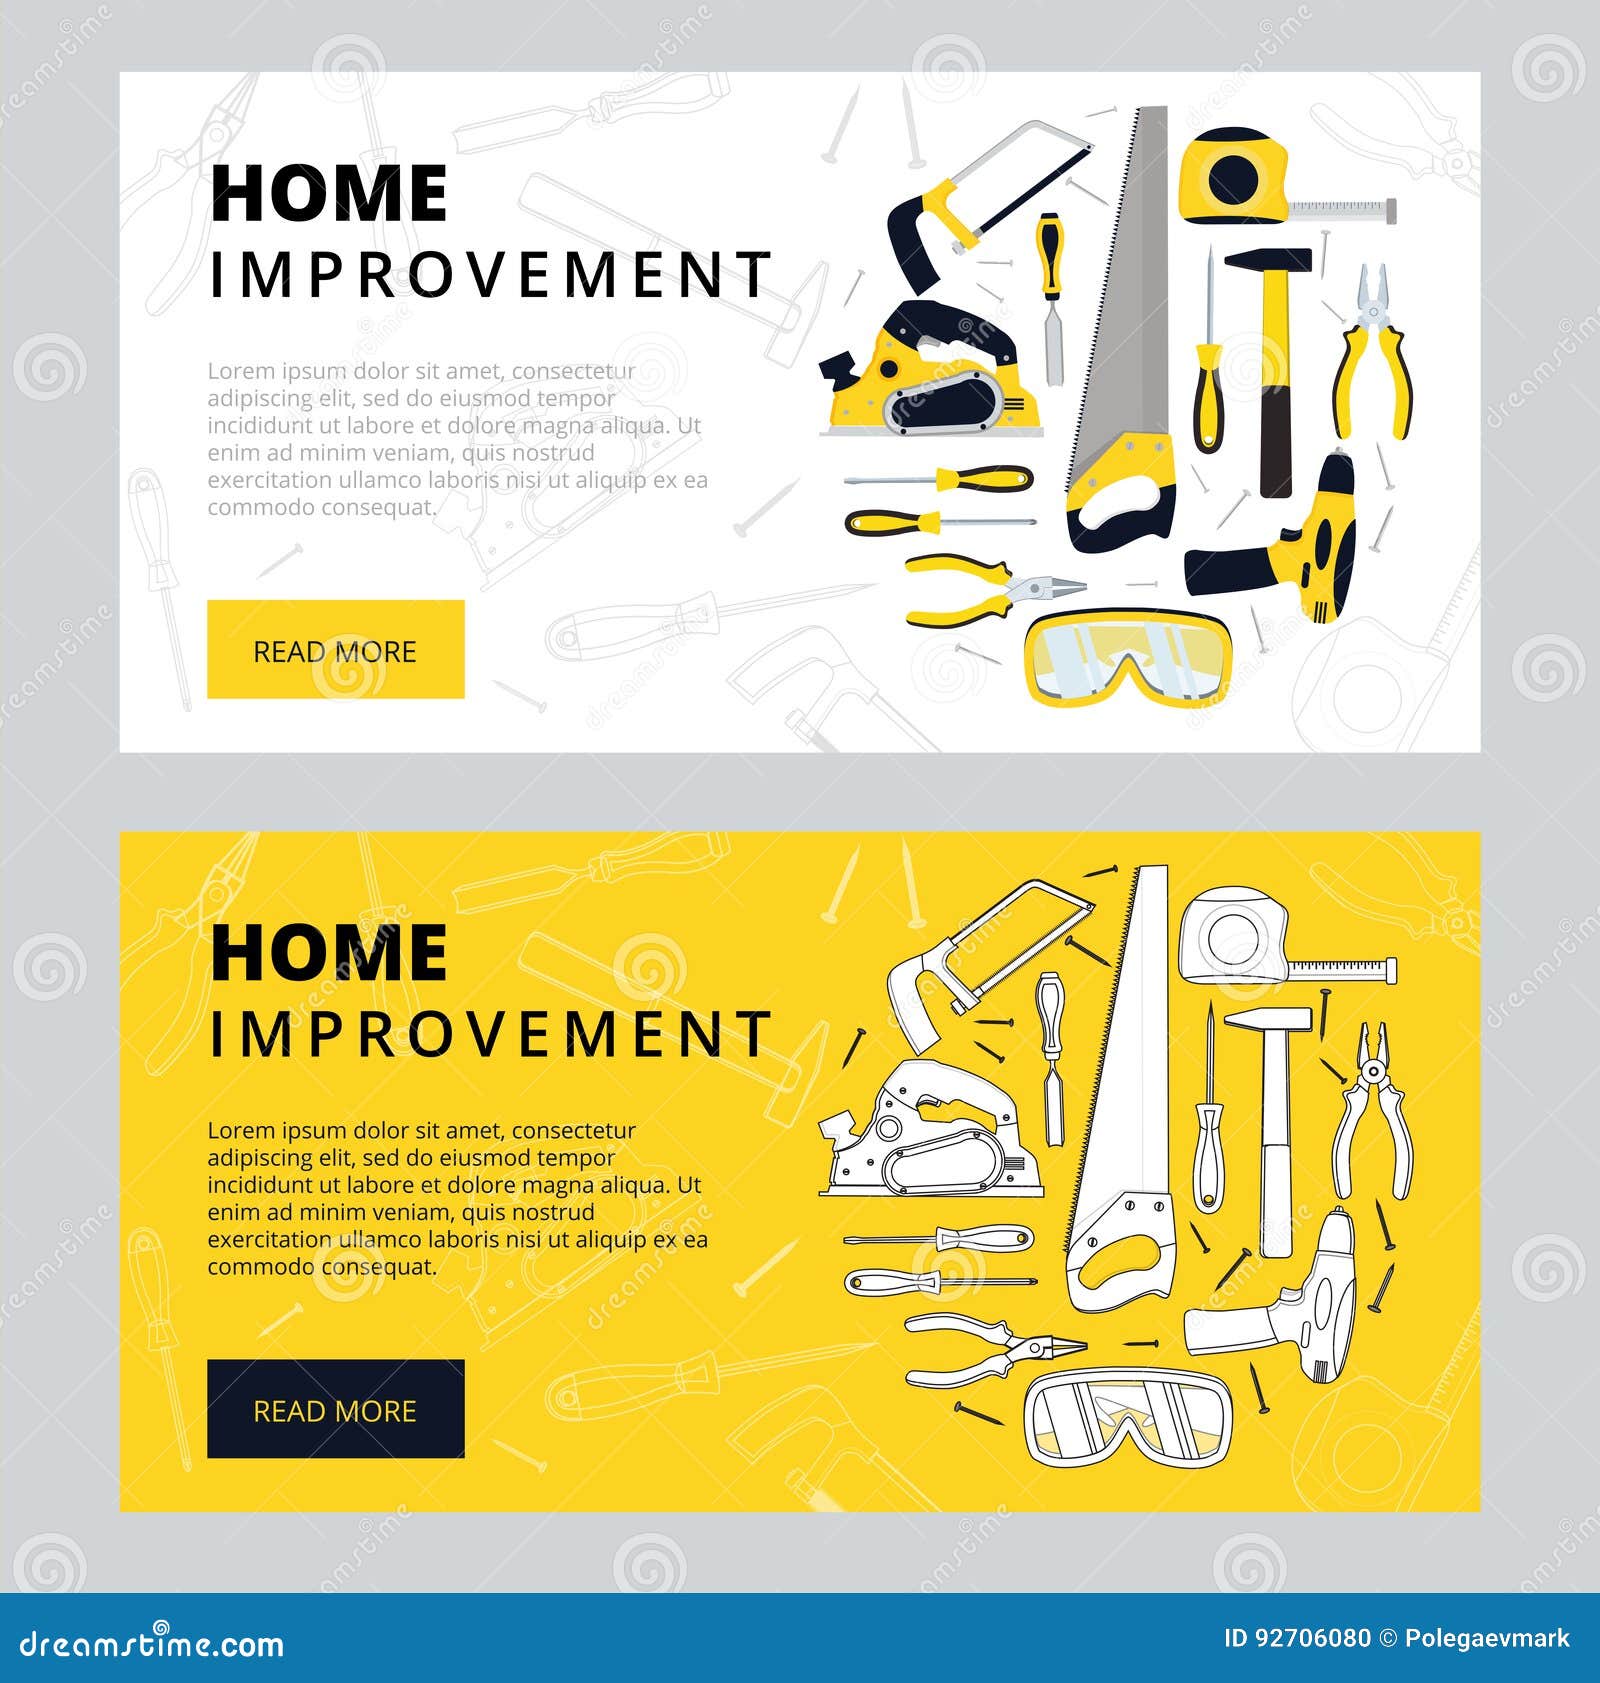 home-improvement-website-templates